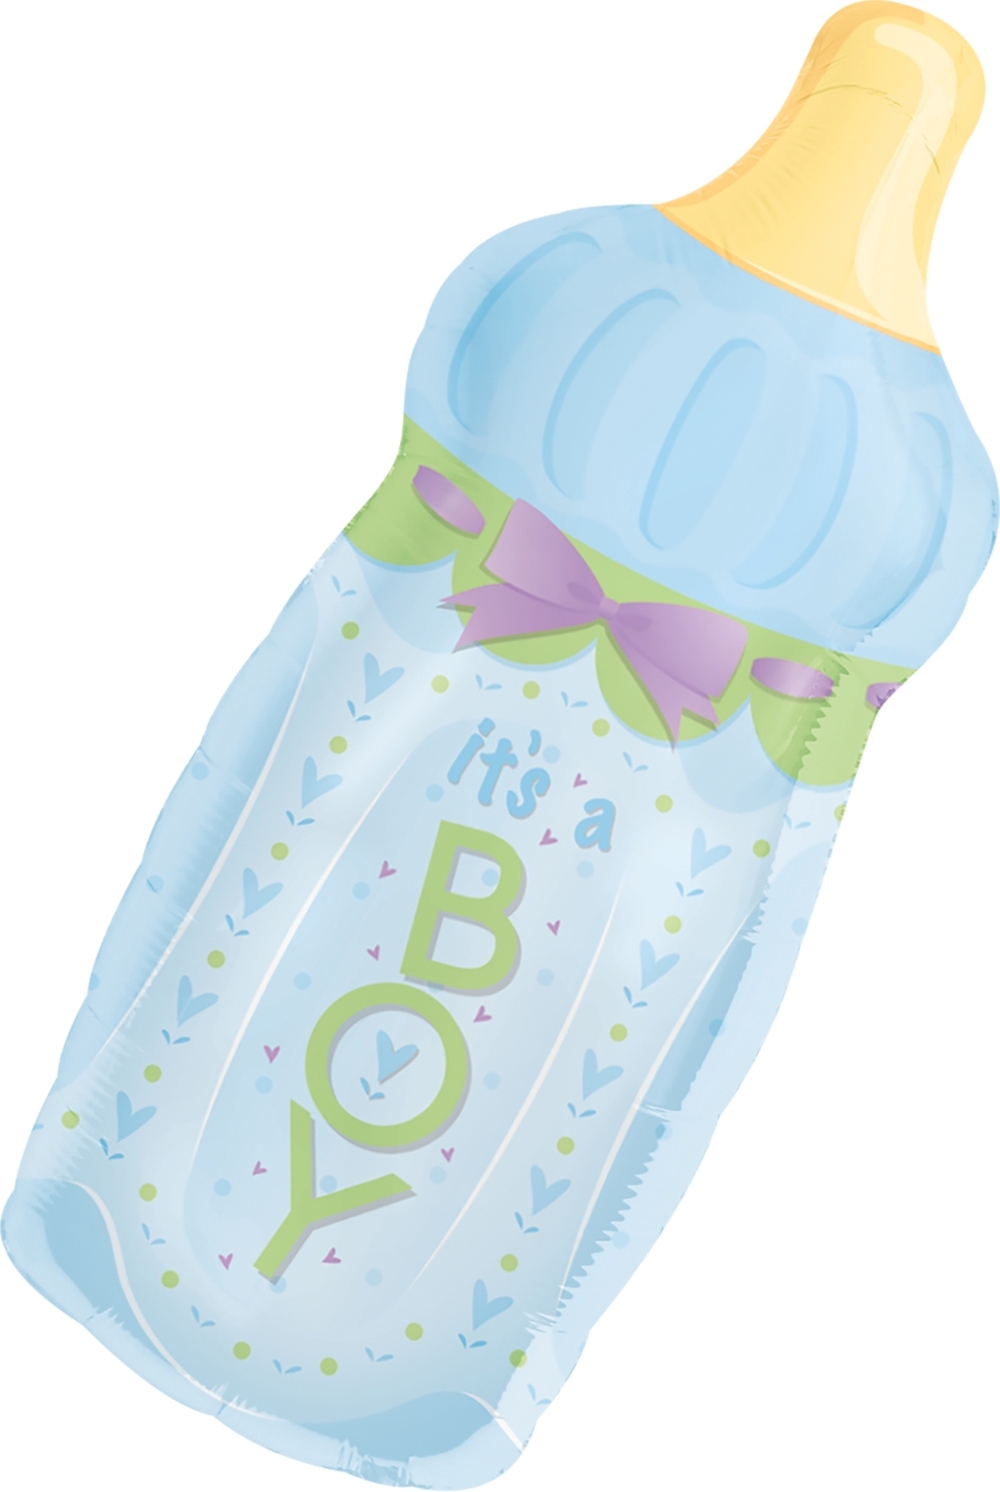 Super Shape - Baby Bottle Boy balloon